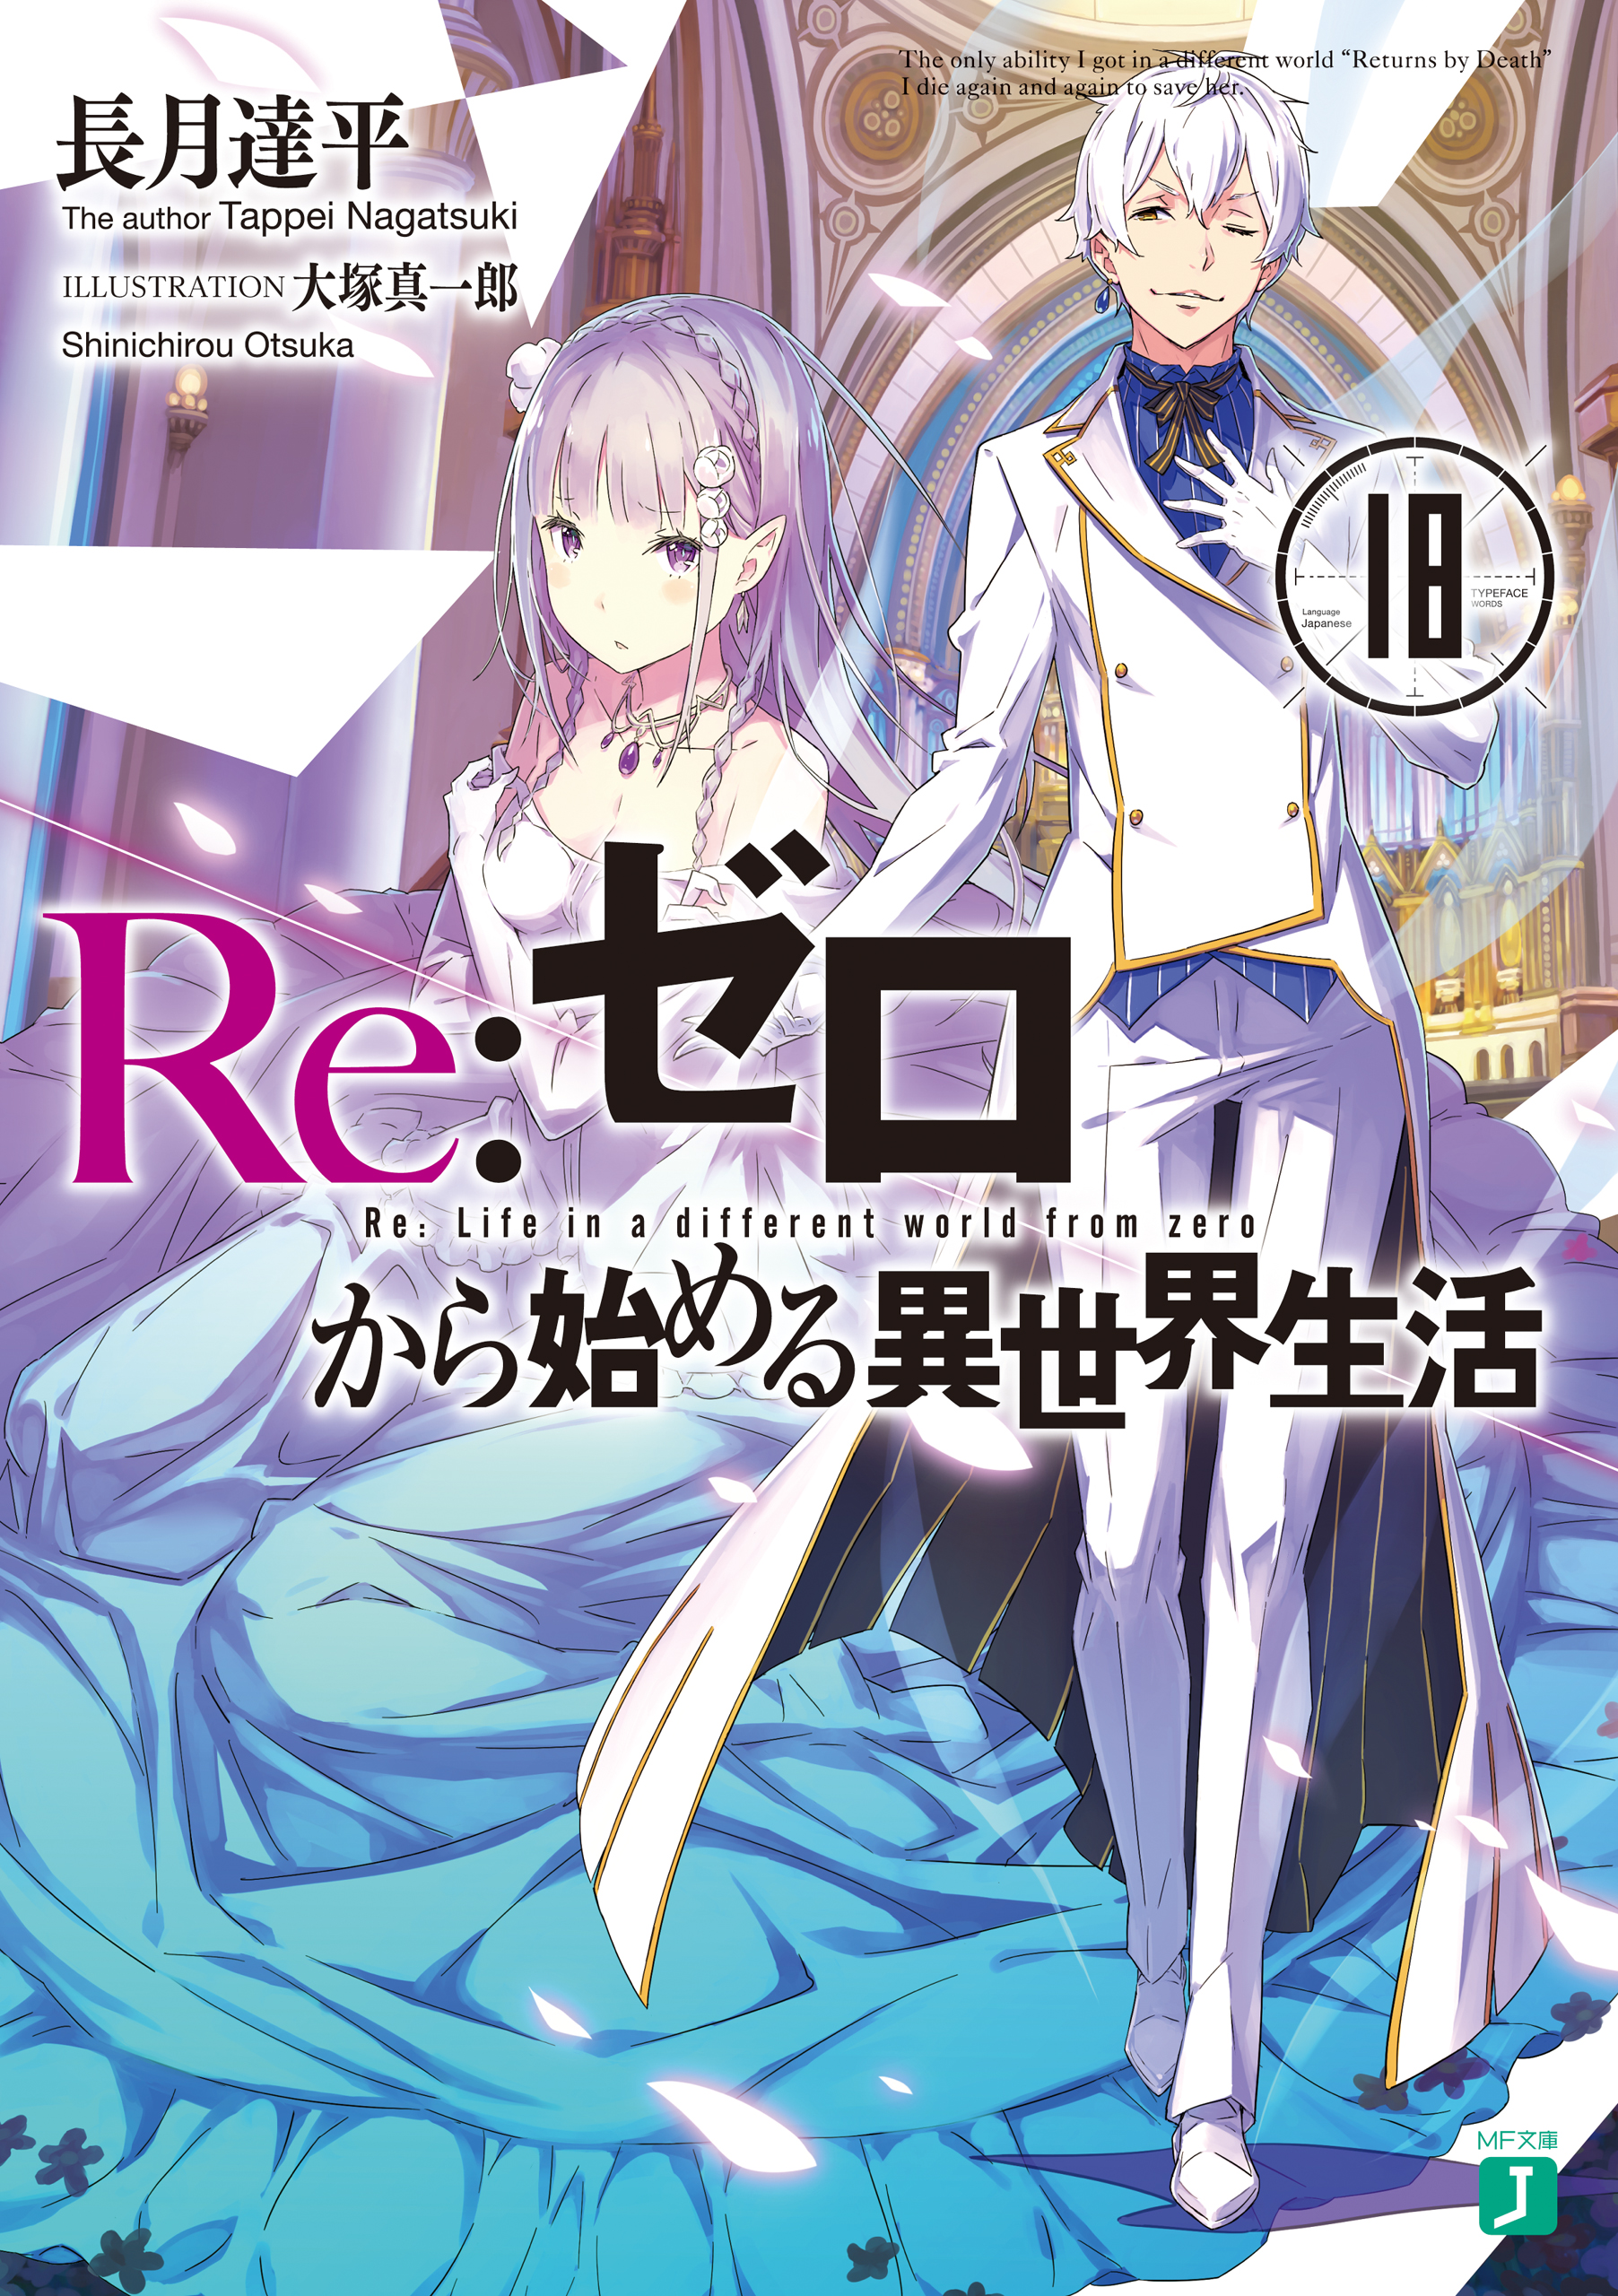 Light Novel Volume 18 | Re:Zero Wiki |